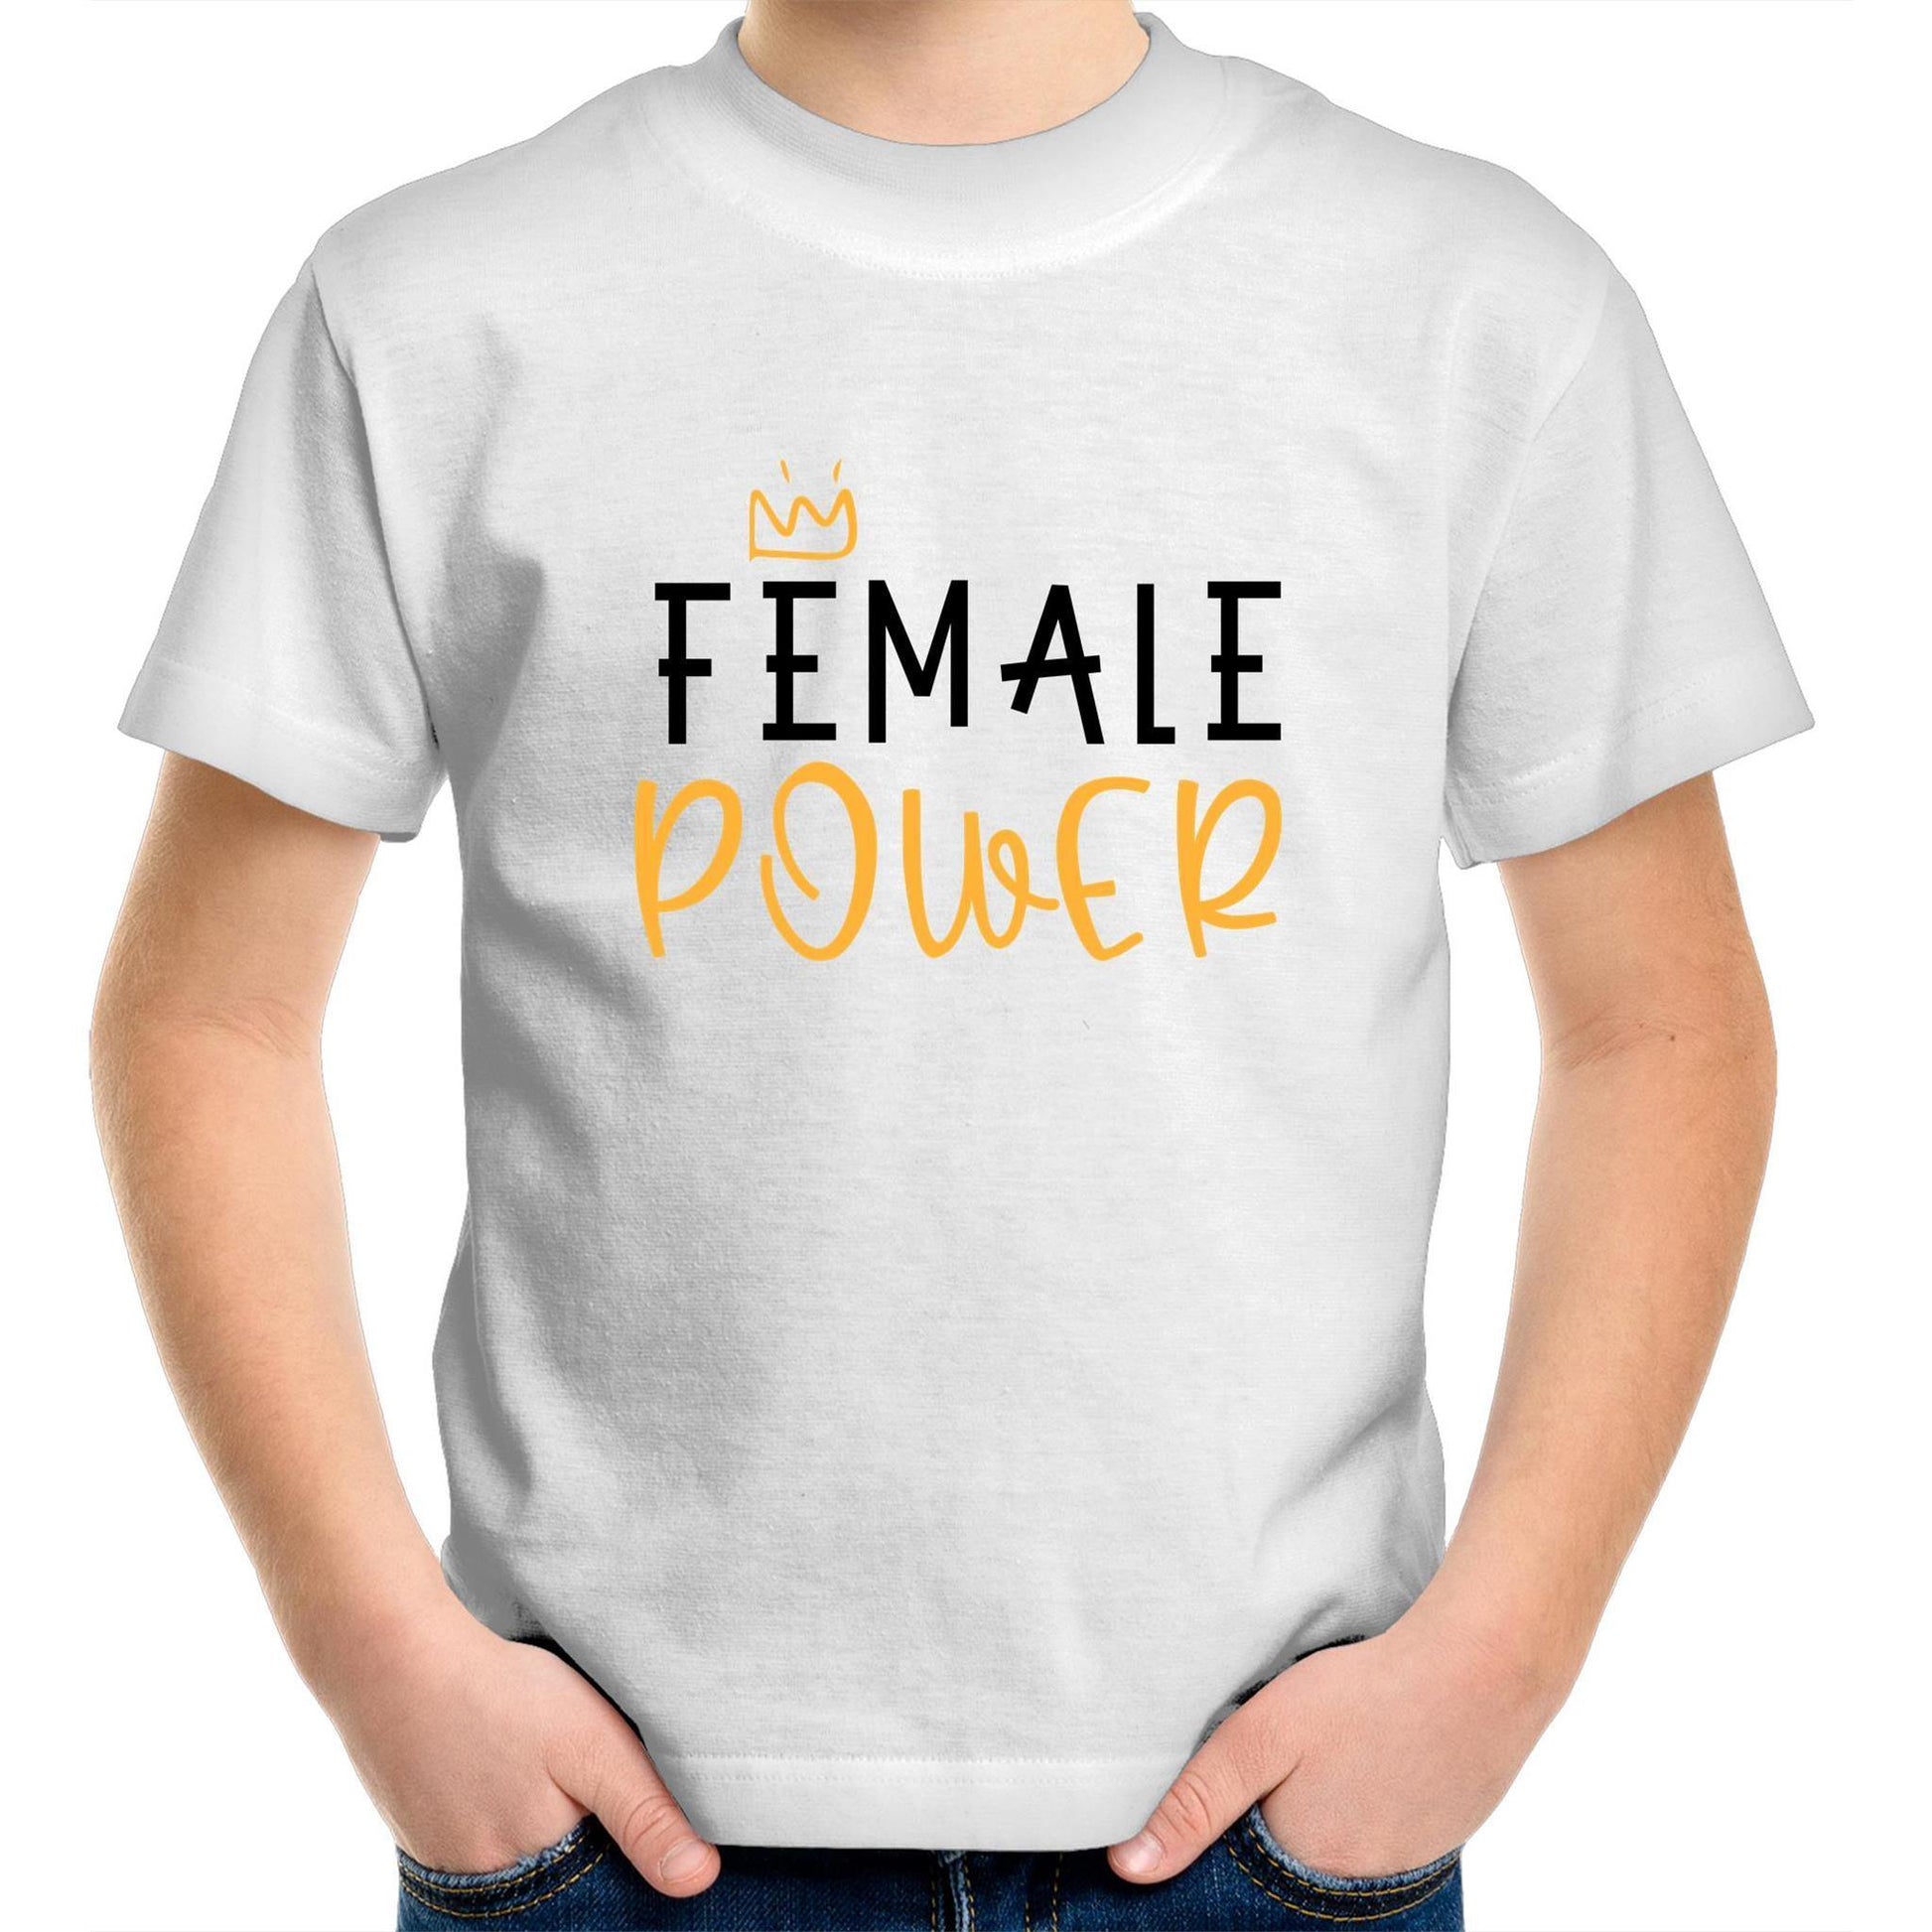 Female Power - Kids Youth Crew T-Shirt White Kids Youth T-shirt